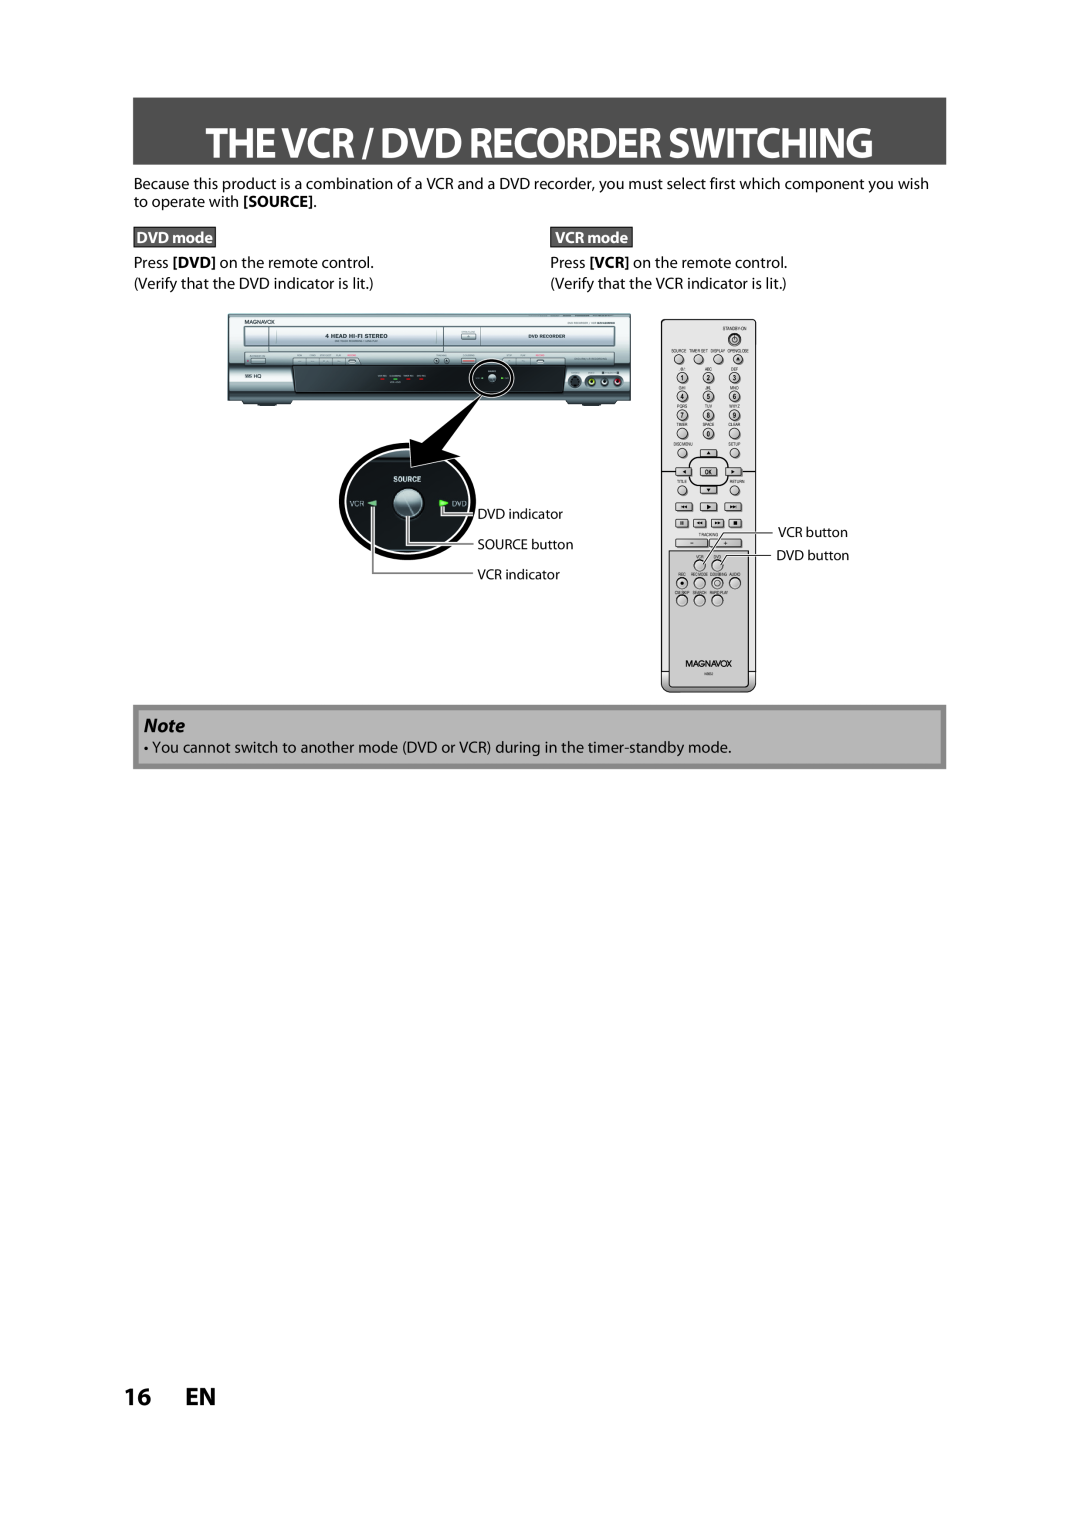 FUNAI BZV420MW8 owner manual 16 EN, Thevcr / Dvd Recorder Switching, DVD mode, VCR mode 